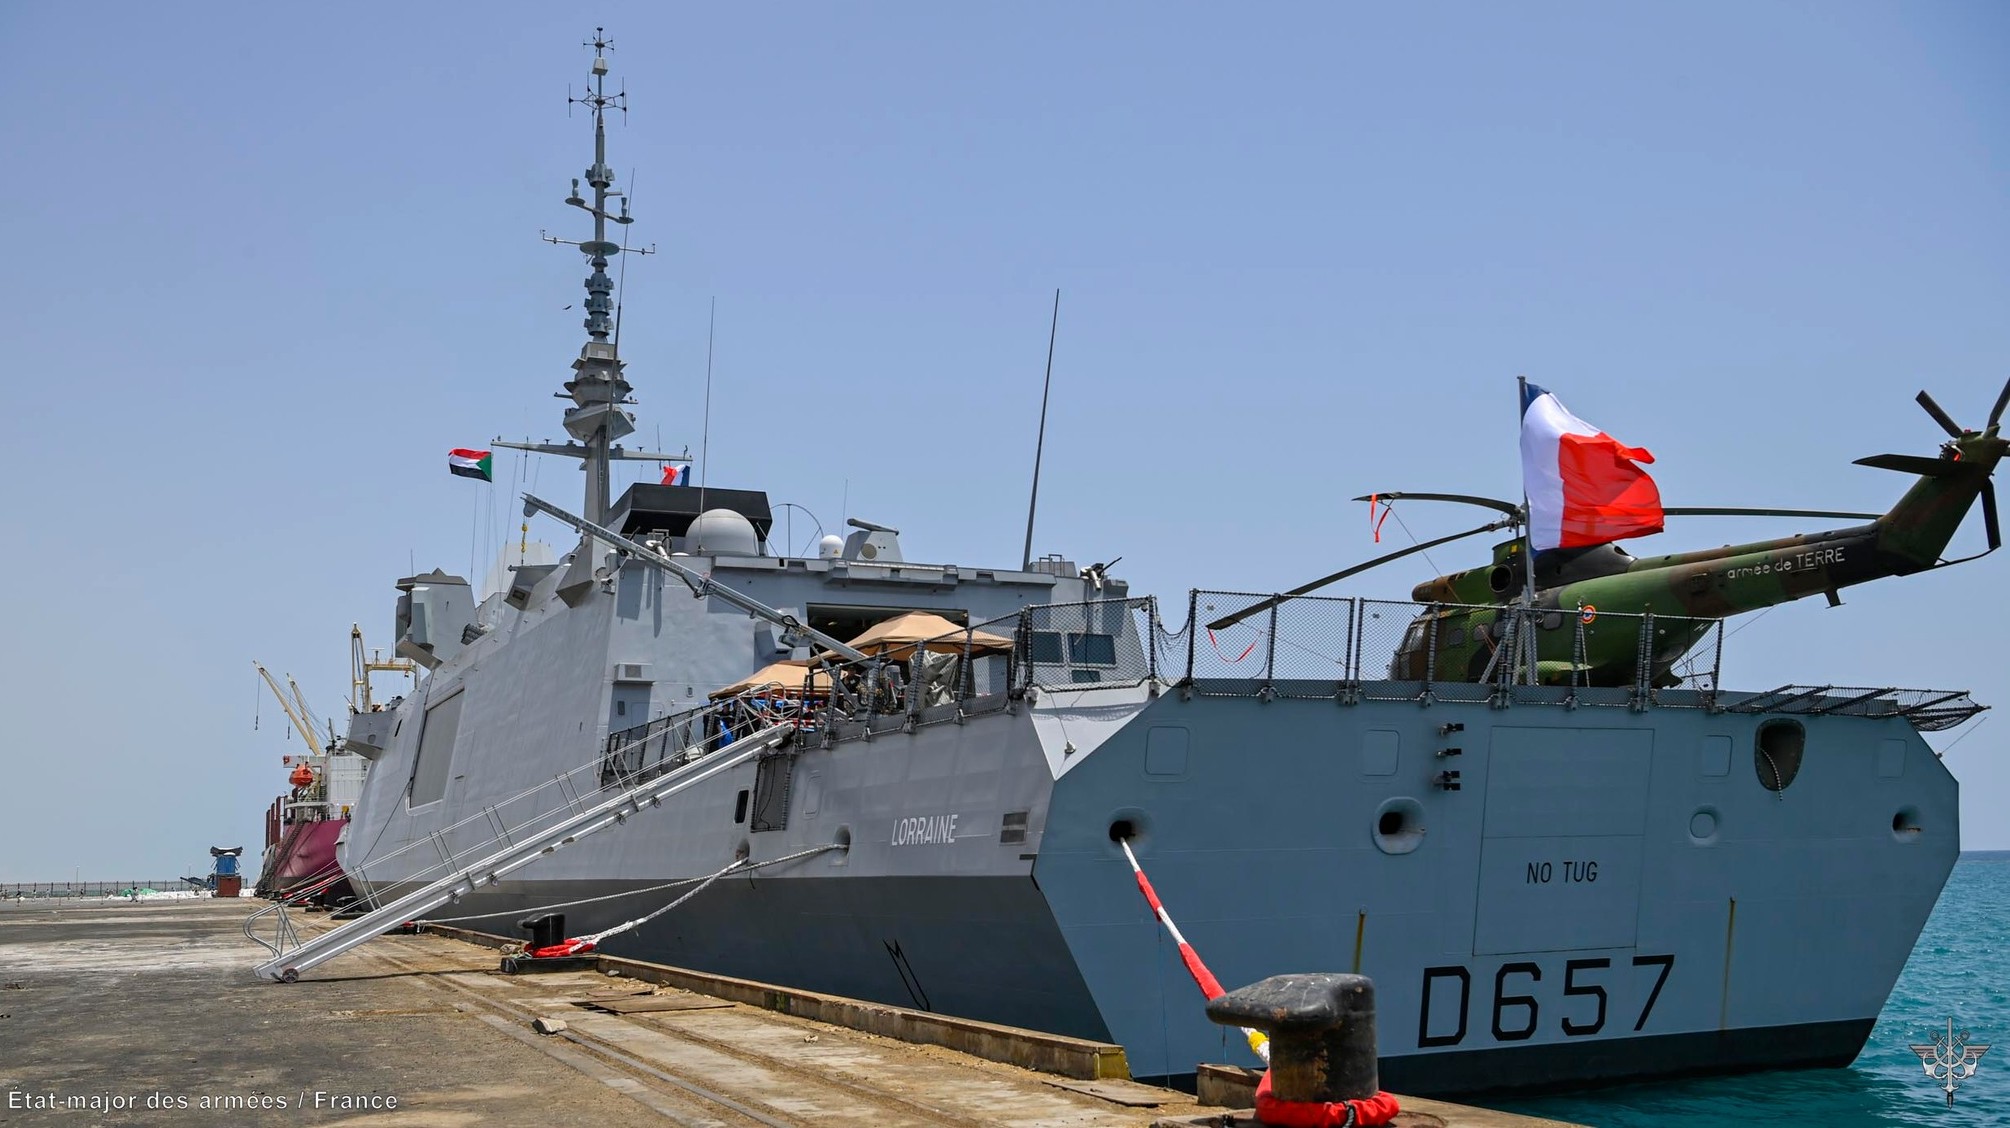 d-657 fs lorraine fremm aquitaine class frigate fregate multi purpose french navy marine nationale 13